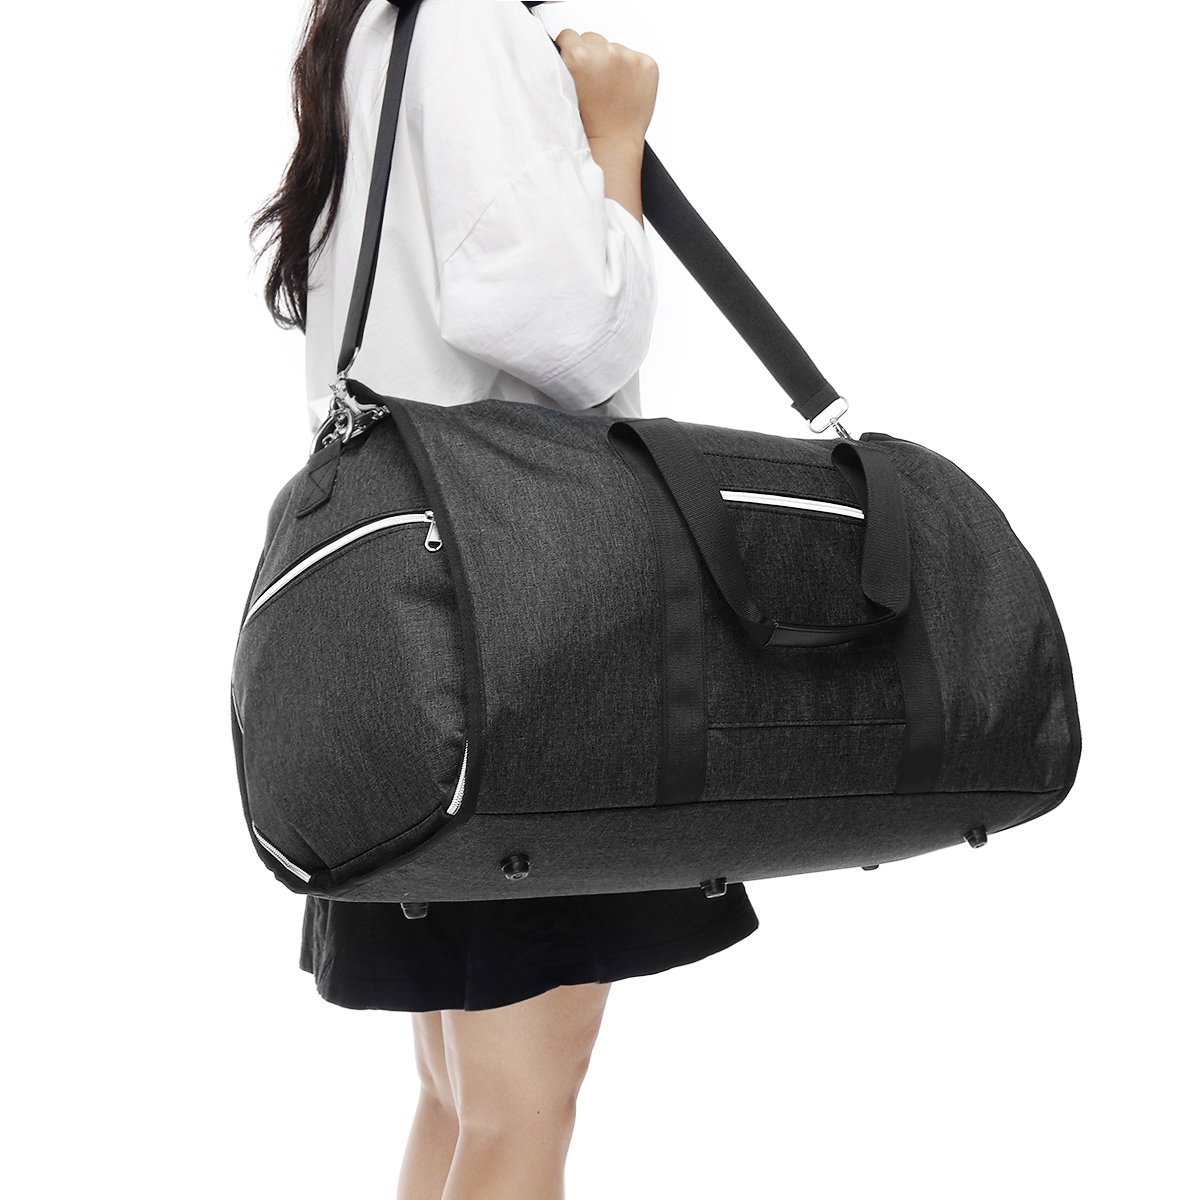 47L-Outdoor-Portable-Travel-Luggage-Bag-Suit-Dress-Garment-Storage-Handbag-Sports-Gym-Bag-1553950-10